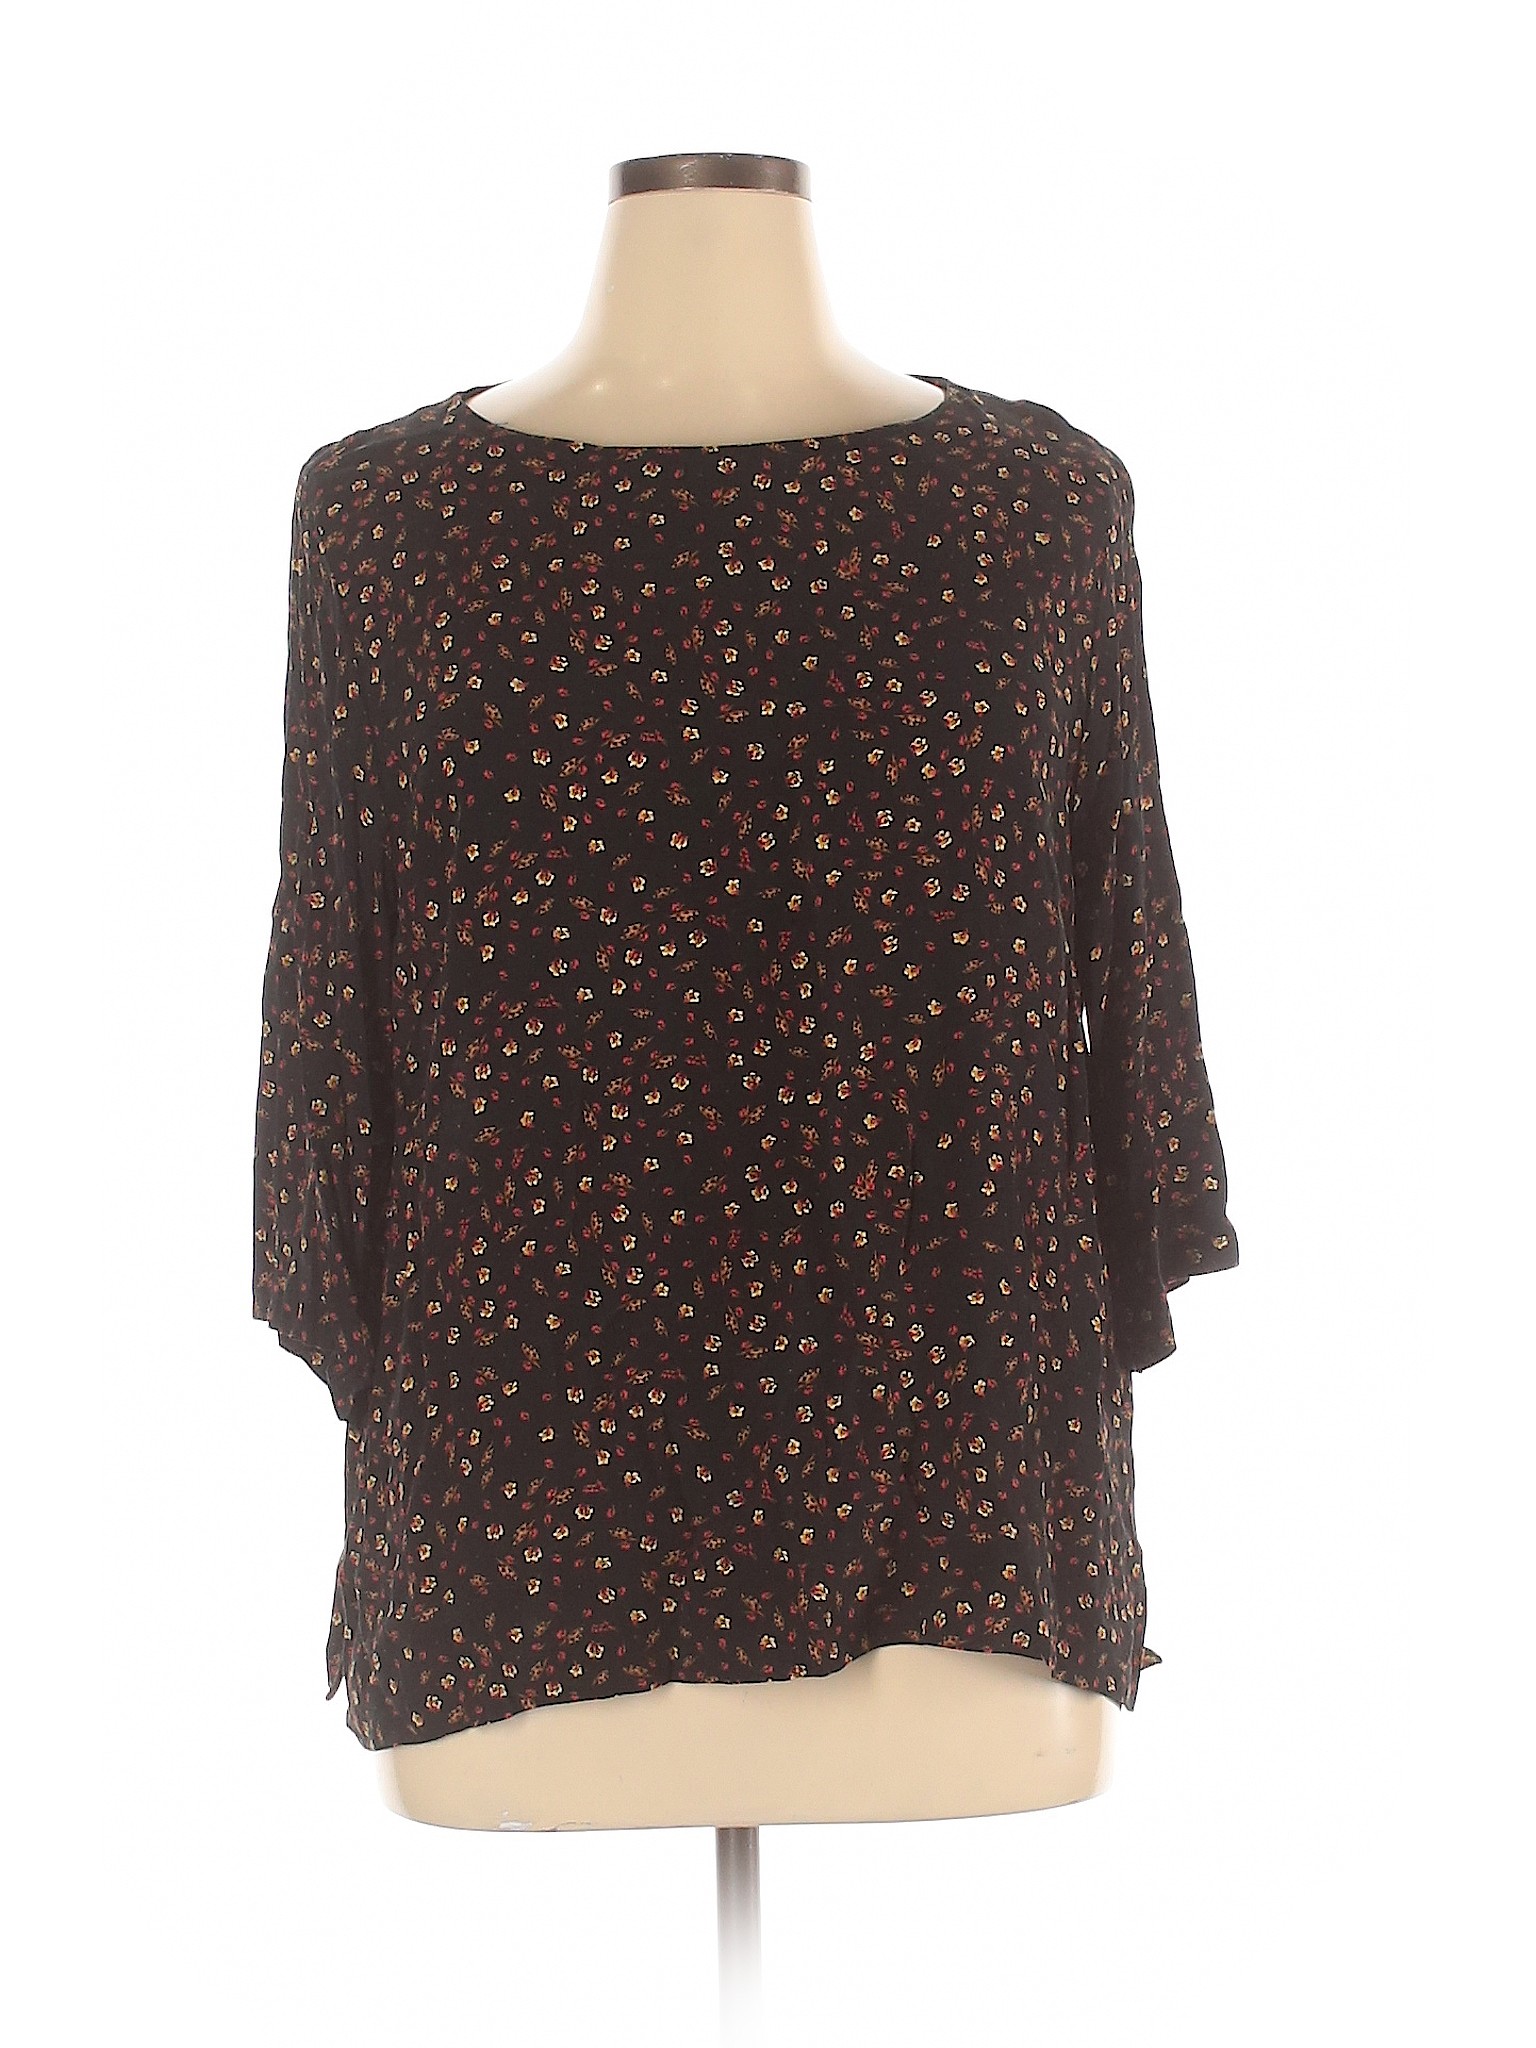 H&M Women Brown 3/4 Sleeve Blouse 14 | eBay